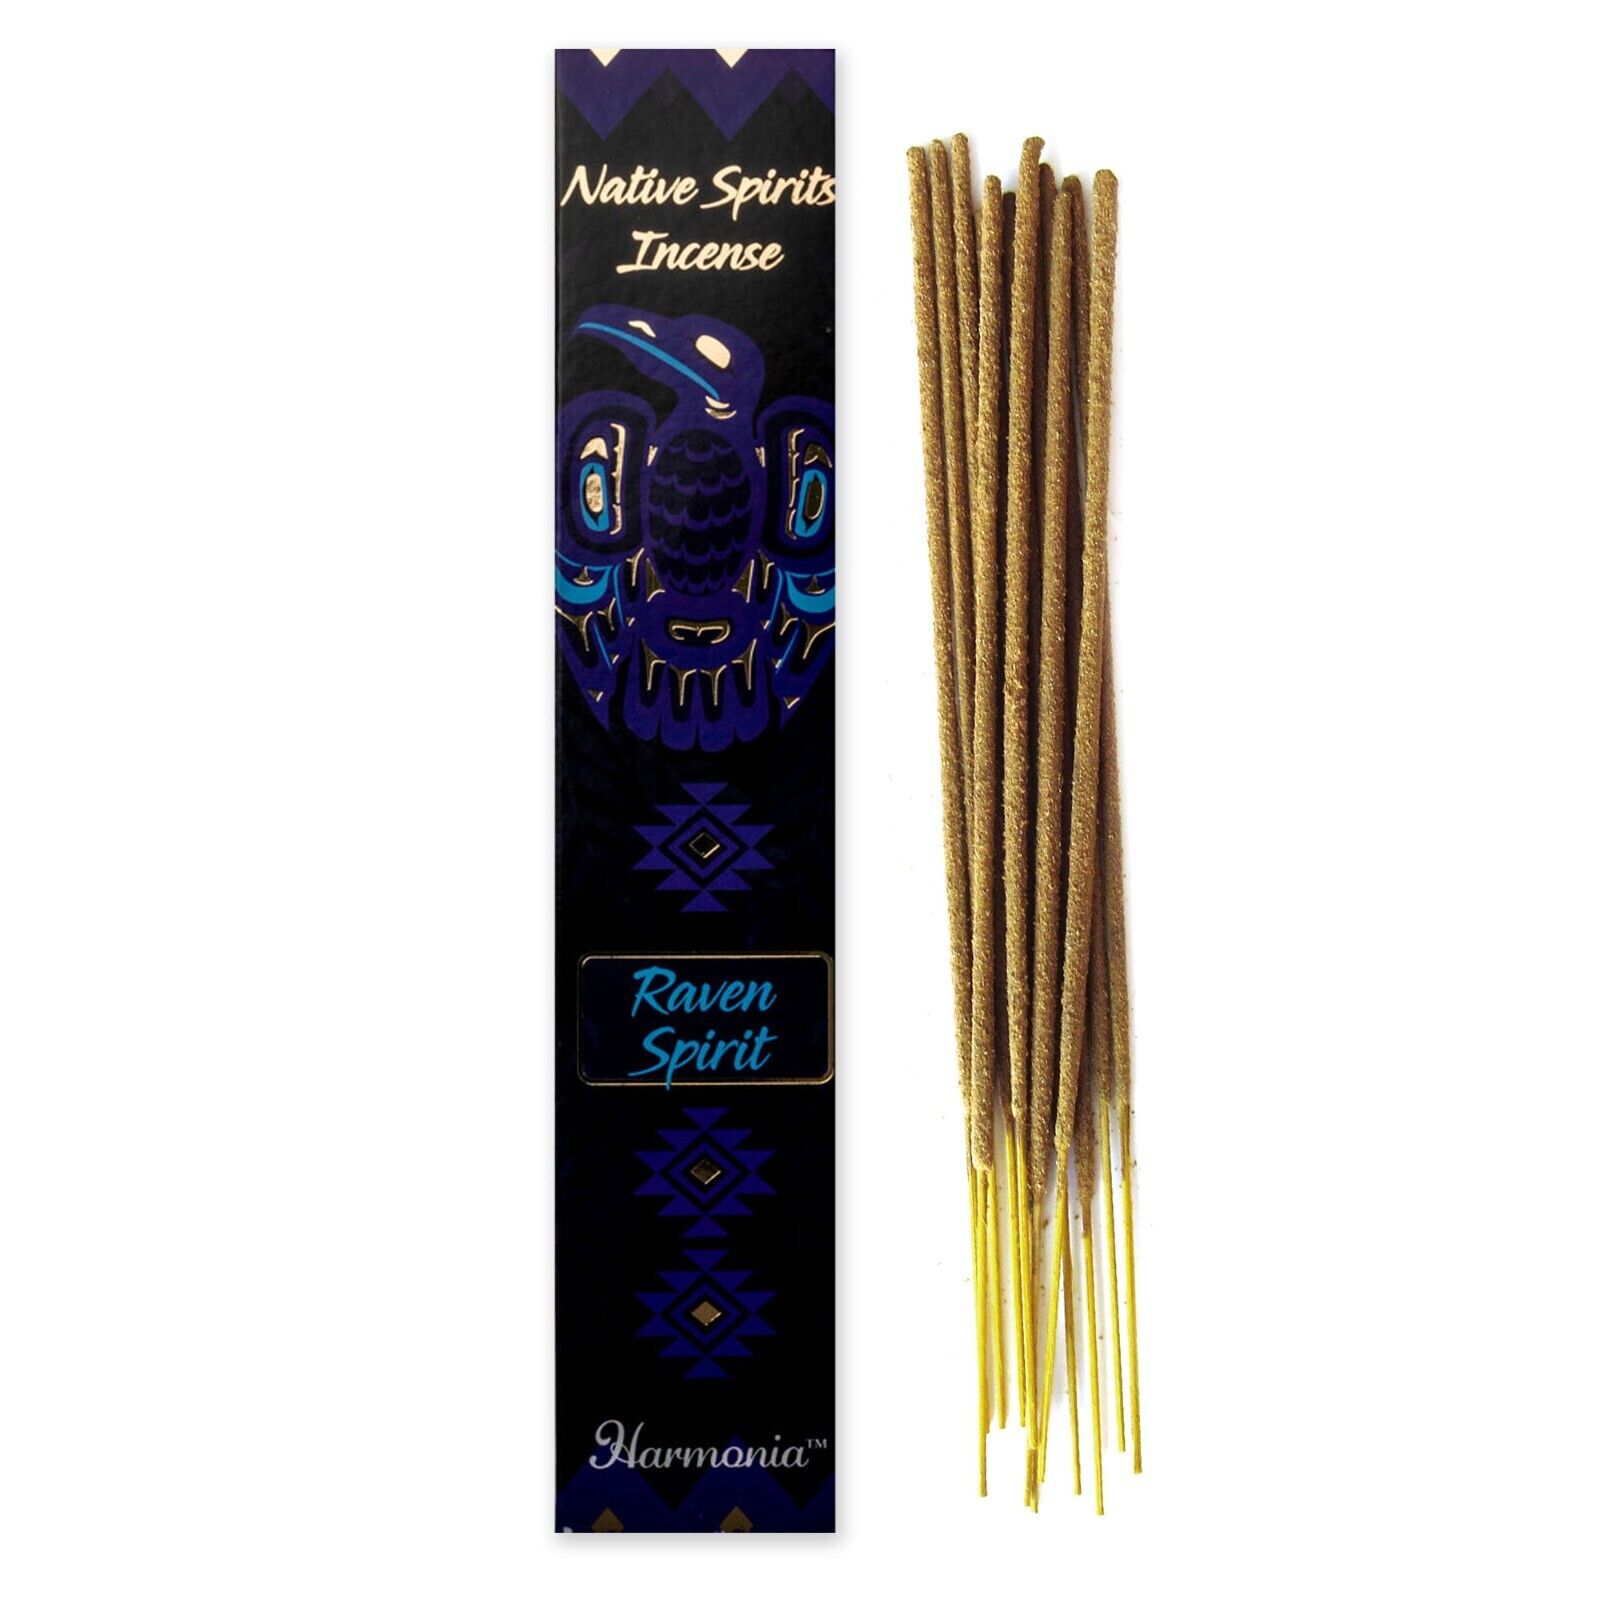 Raven Spirit (Patchouli) Incense Sticks by Native Spirits NEW - One (15g) Box